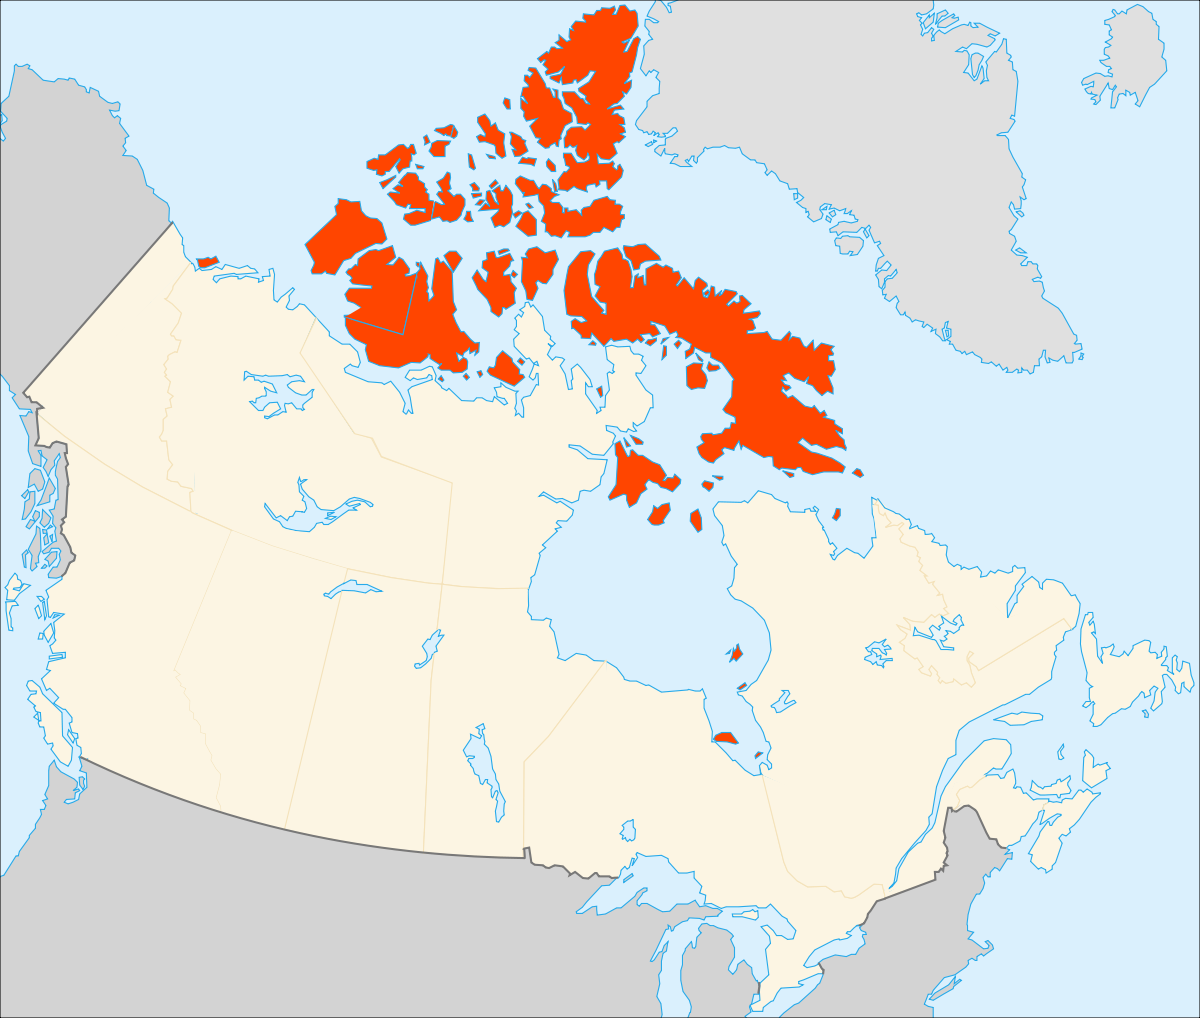 Архипелаг канадский арктический на карте северной америки. Канадский Арктический архипелаг на карте. Остров канадский Арктический архипелаг на карте. Канадский оптический архипелаг. Арктический архипелаг Канады на карте.